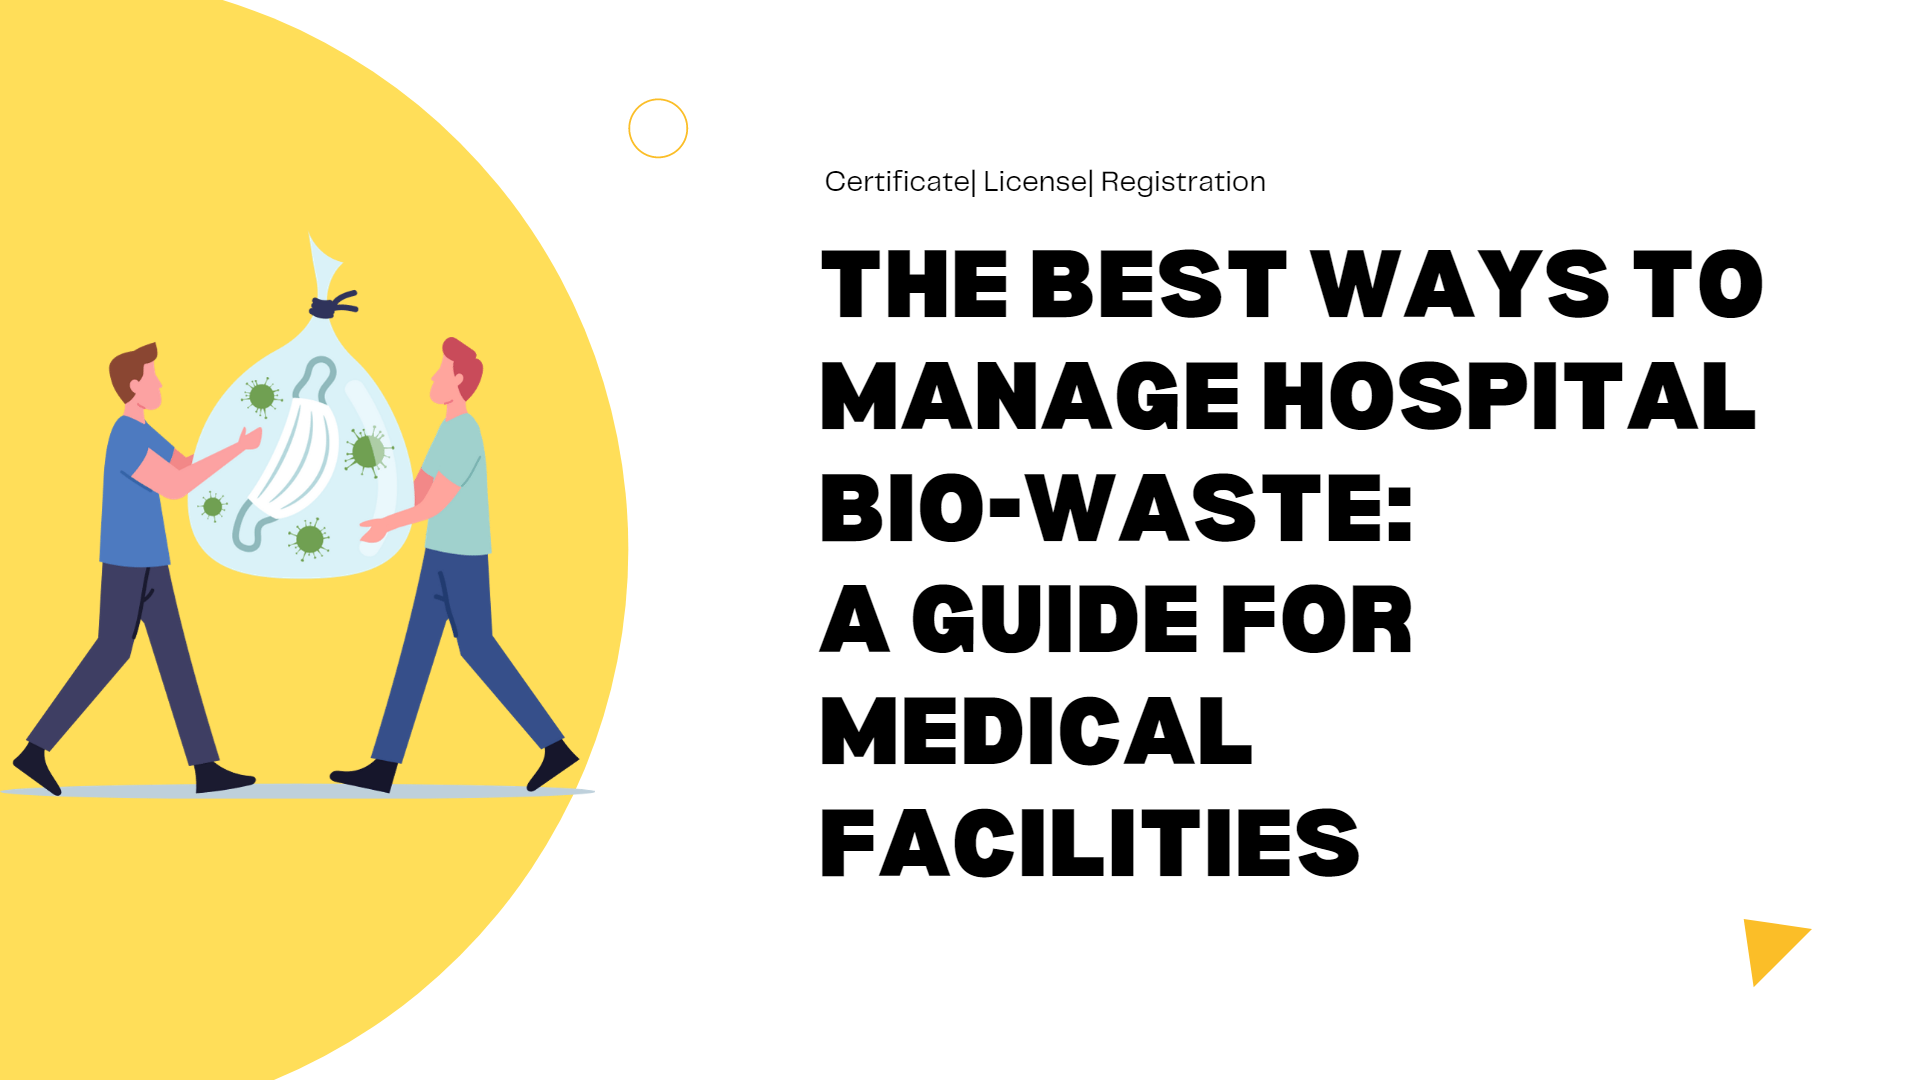 Hospital Bio-Waste